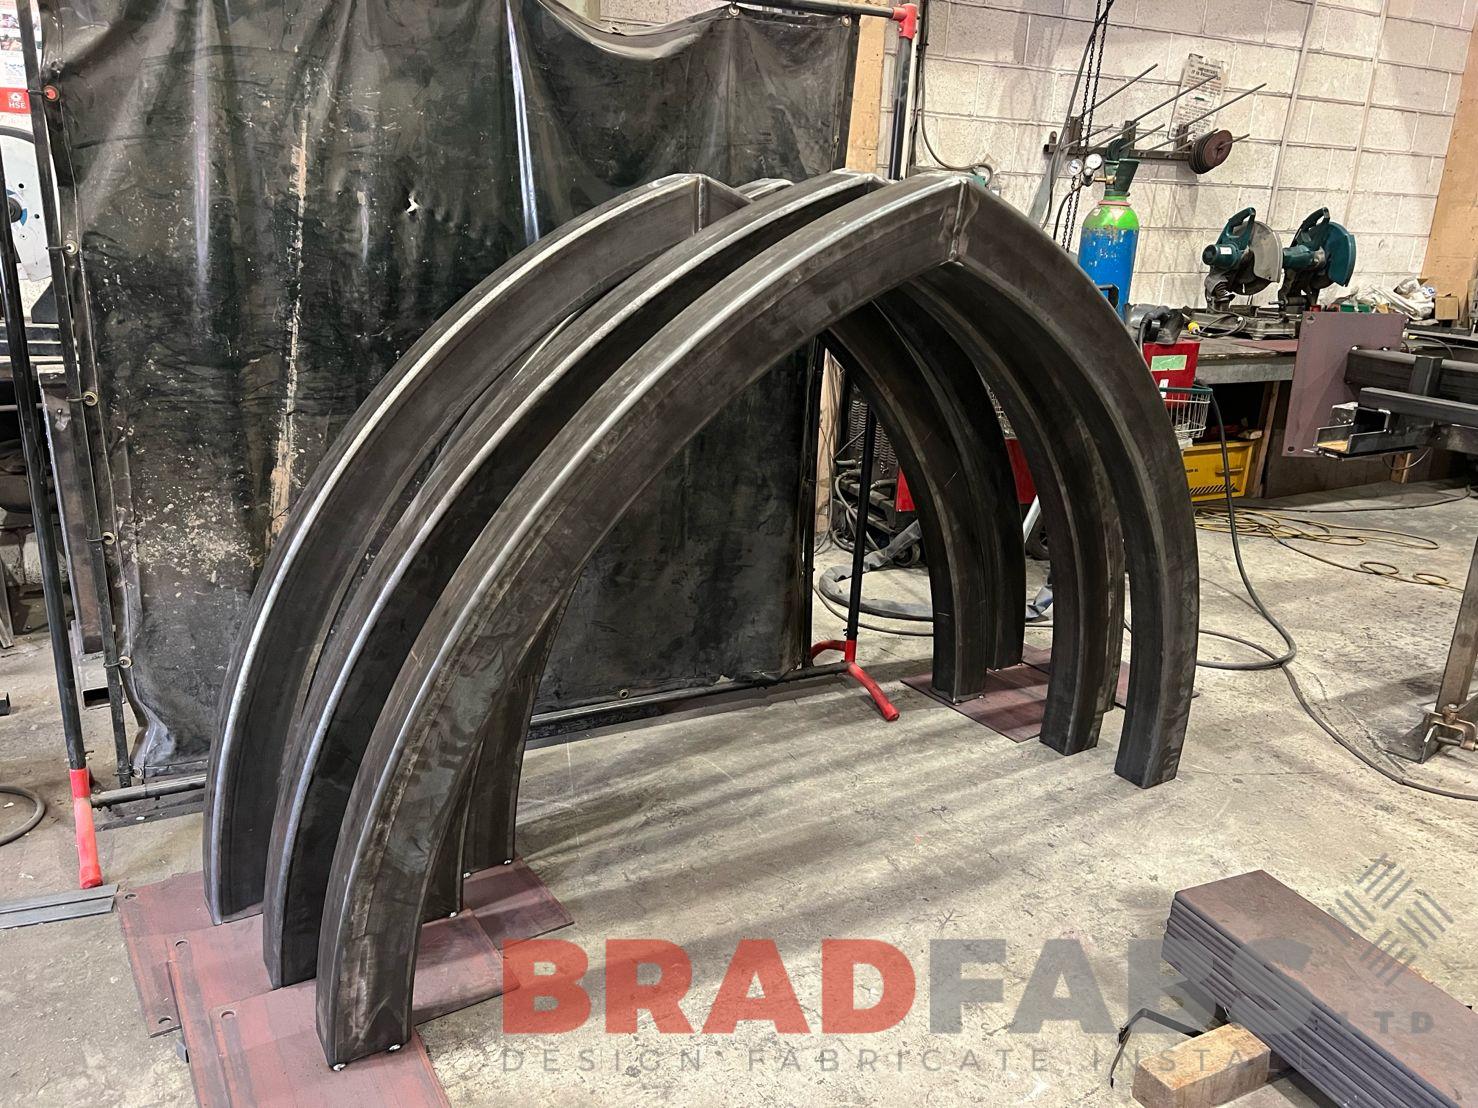 Bradfabs bespoke fabrication, steel arches, metal fabrication